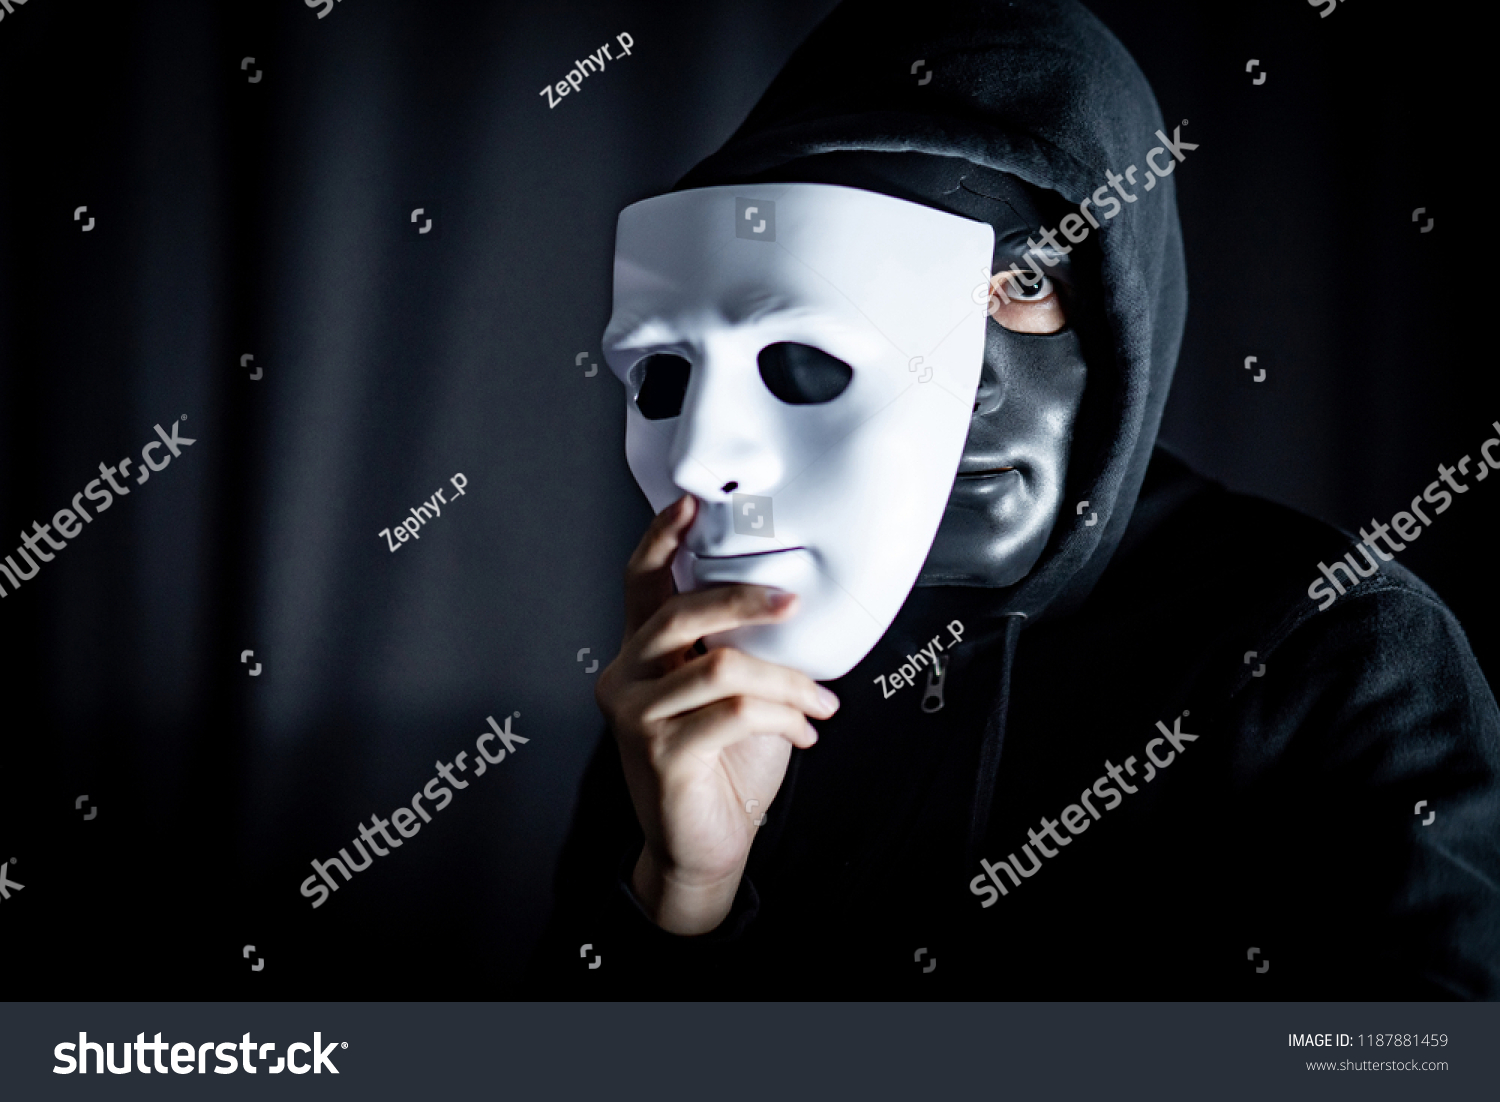 Mystery hoody man wearing black mask holding white mask. Anonymous social masking. Major depressive disorder or bipolar disorder. Halloween concept #1187881459